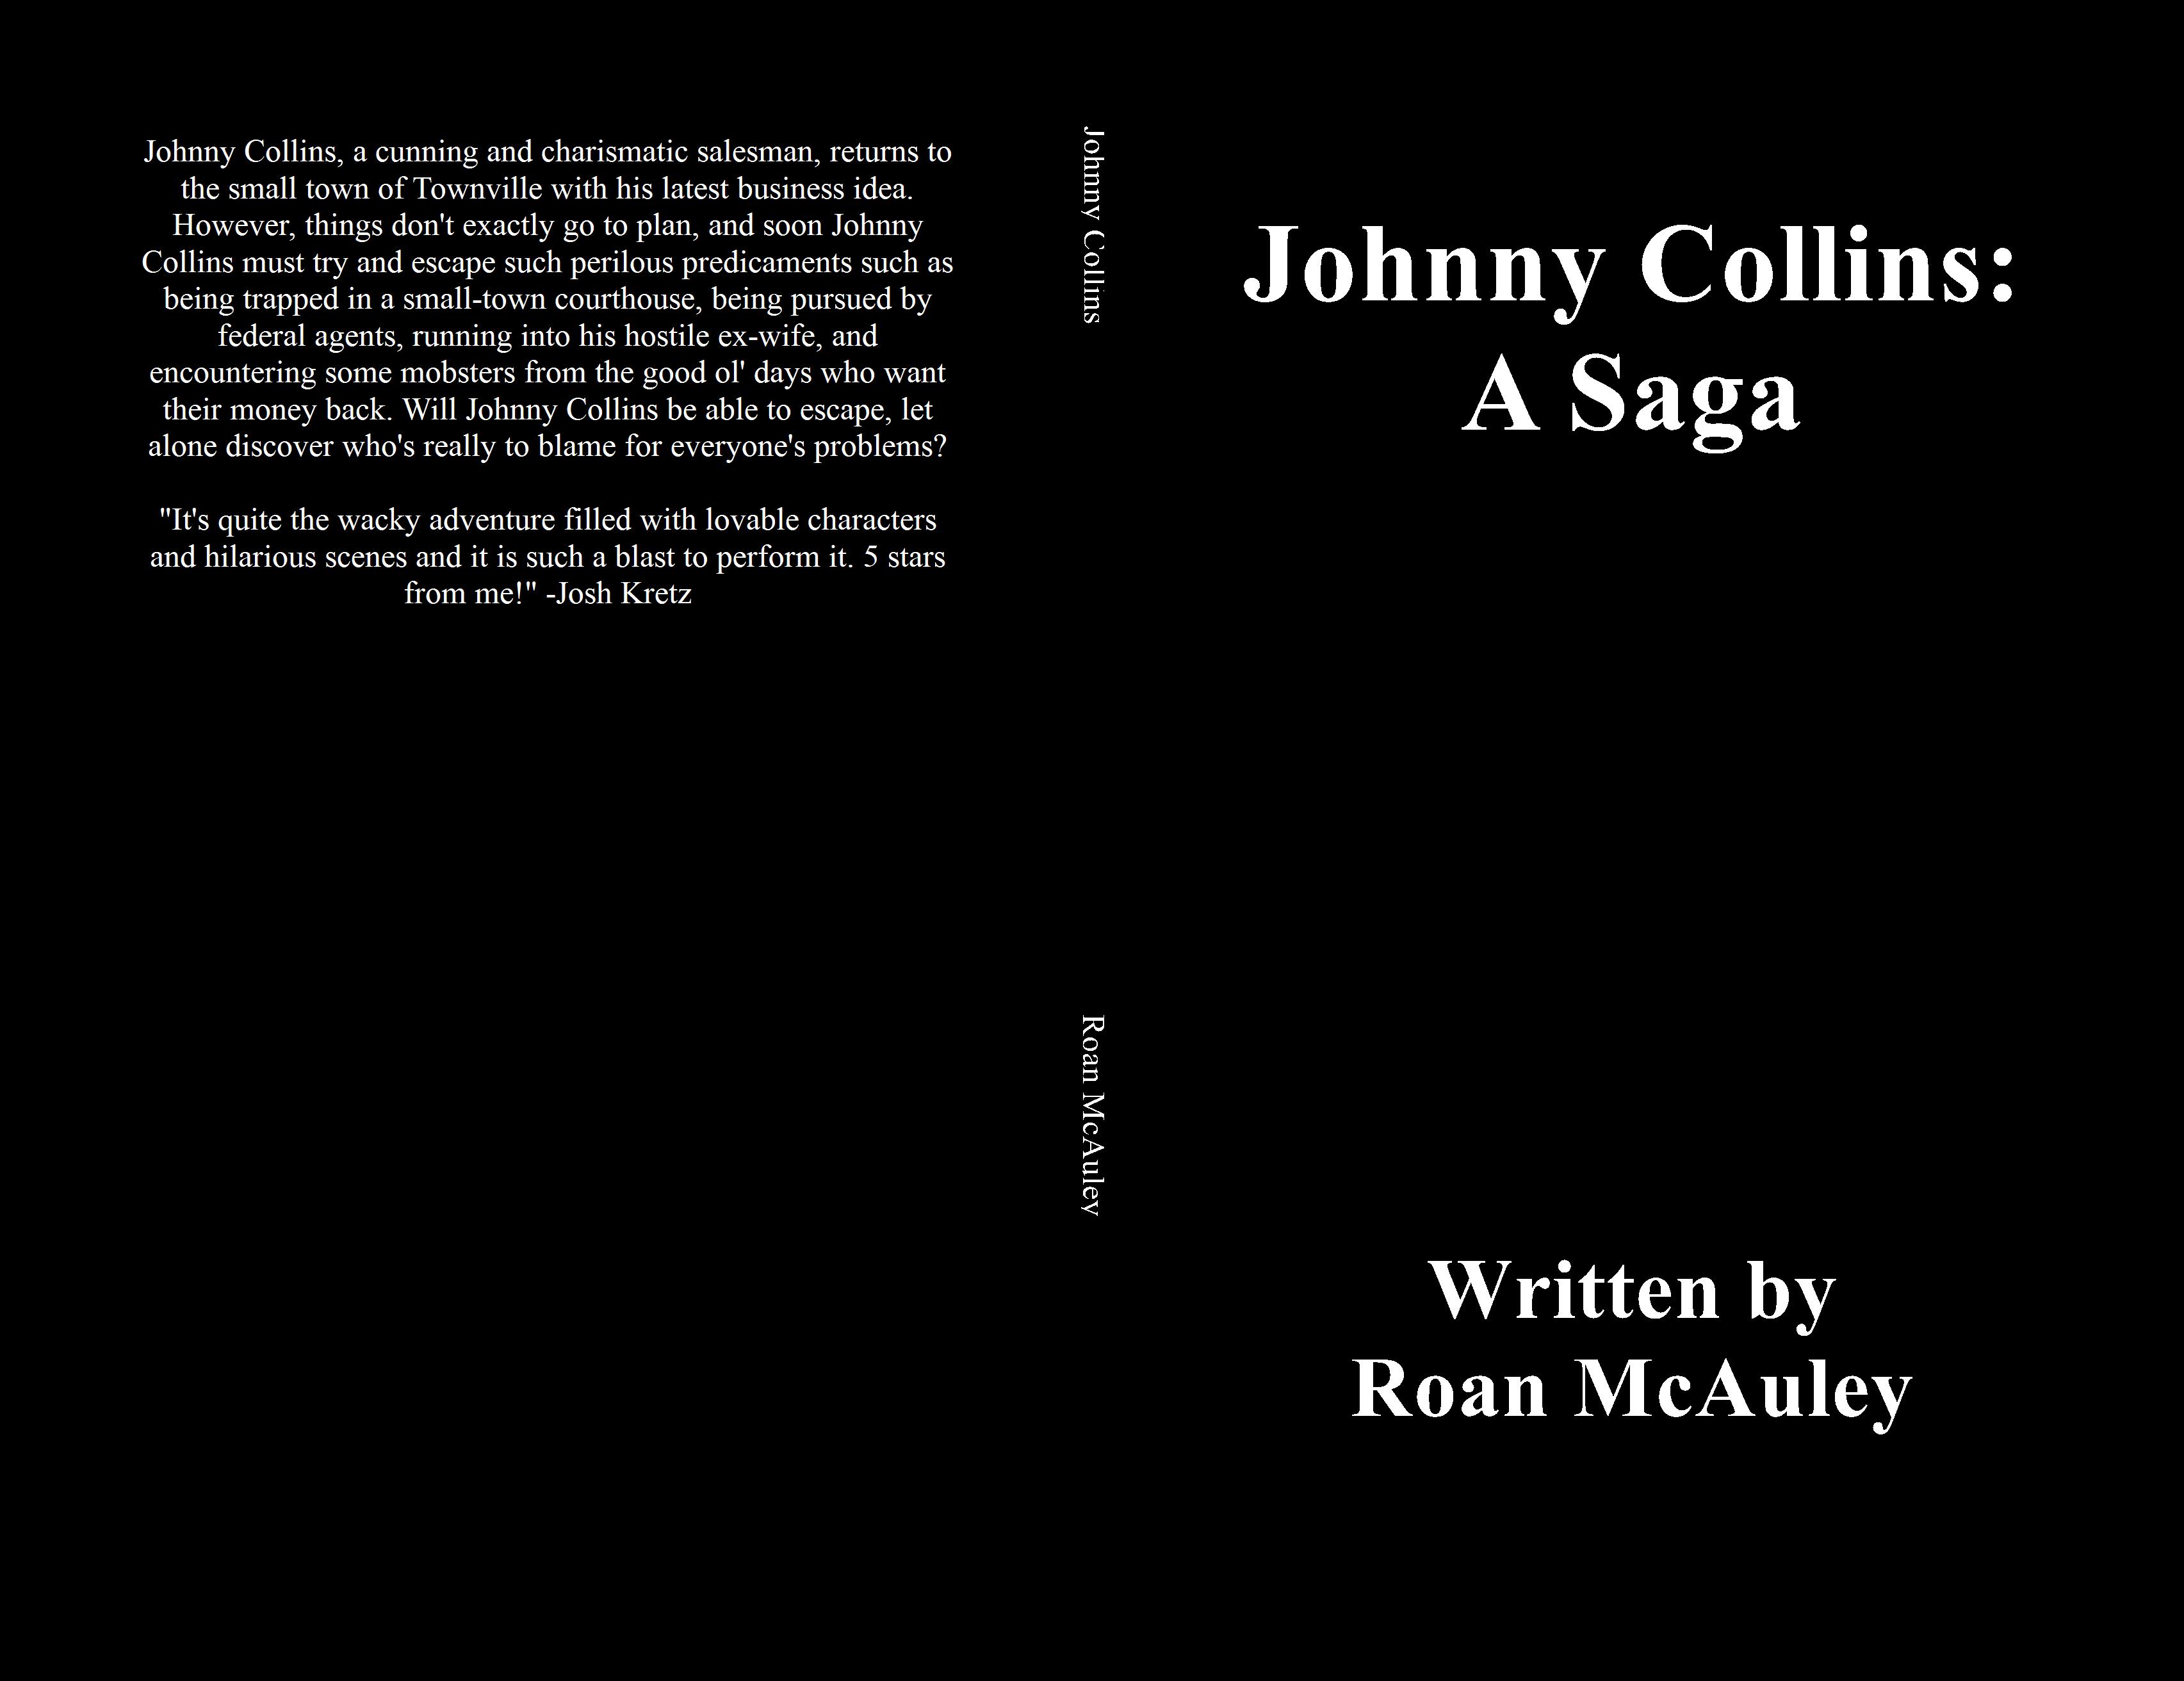 Johnny Collins: A Saga cover image